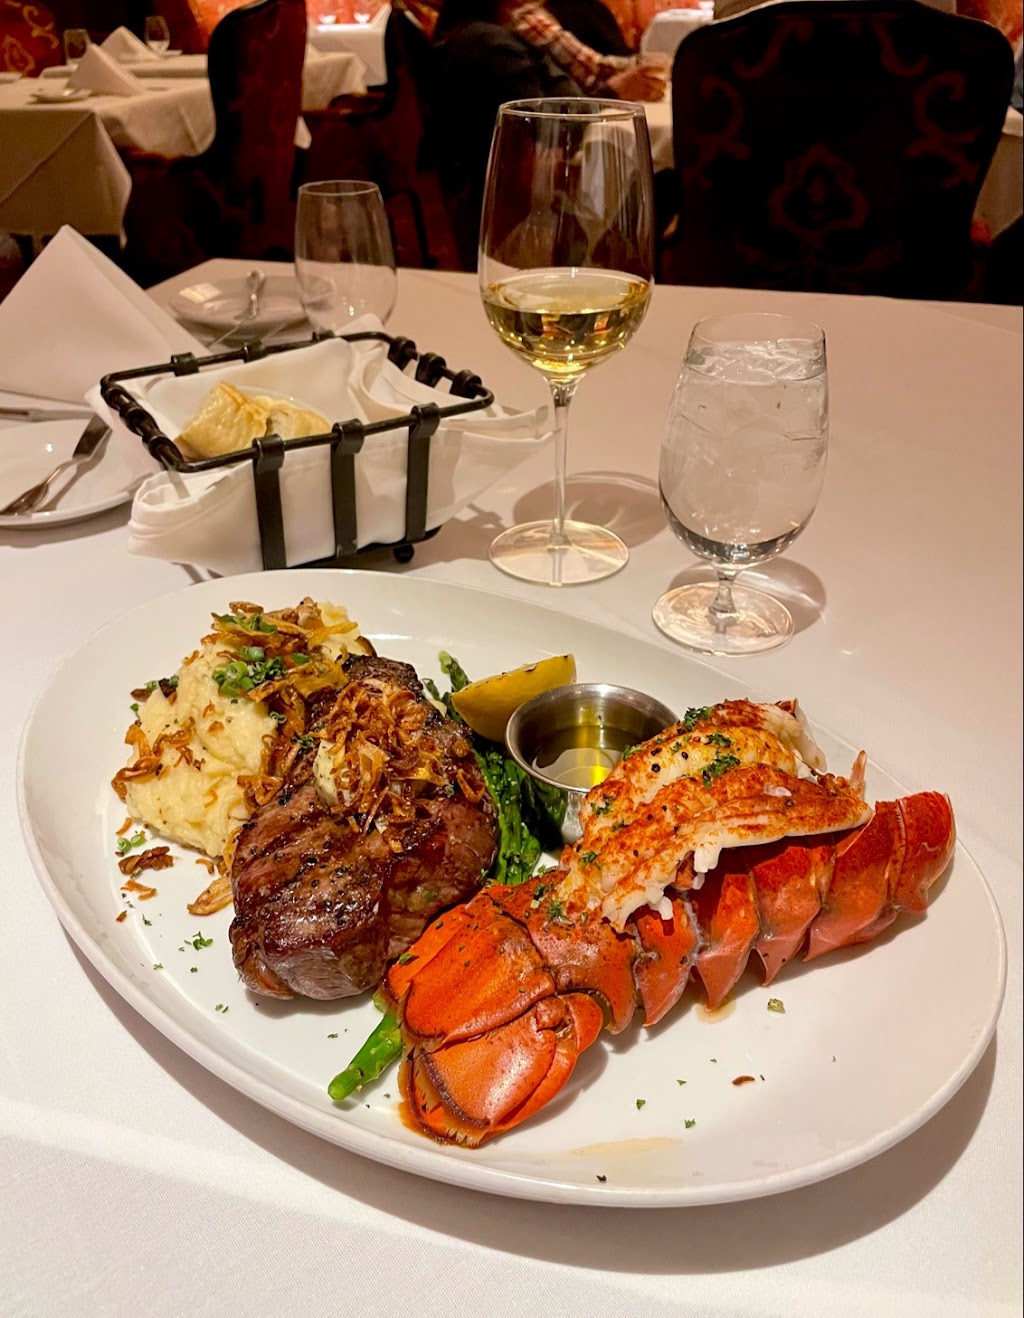 Crystal Bay Steak and Lobster House | 14 NV-28, Crystal Bay, NV 89402 | Phone: (775) 833-6333